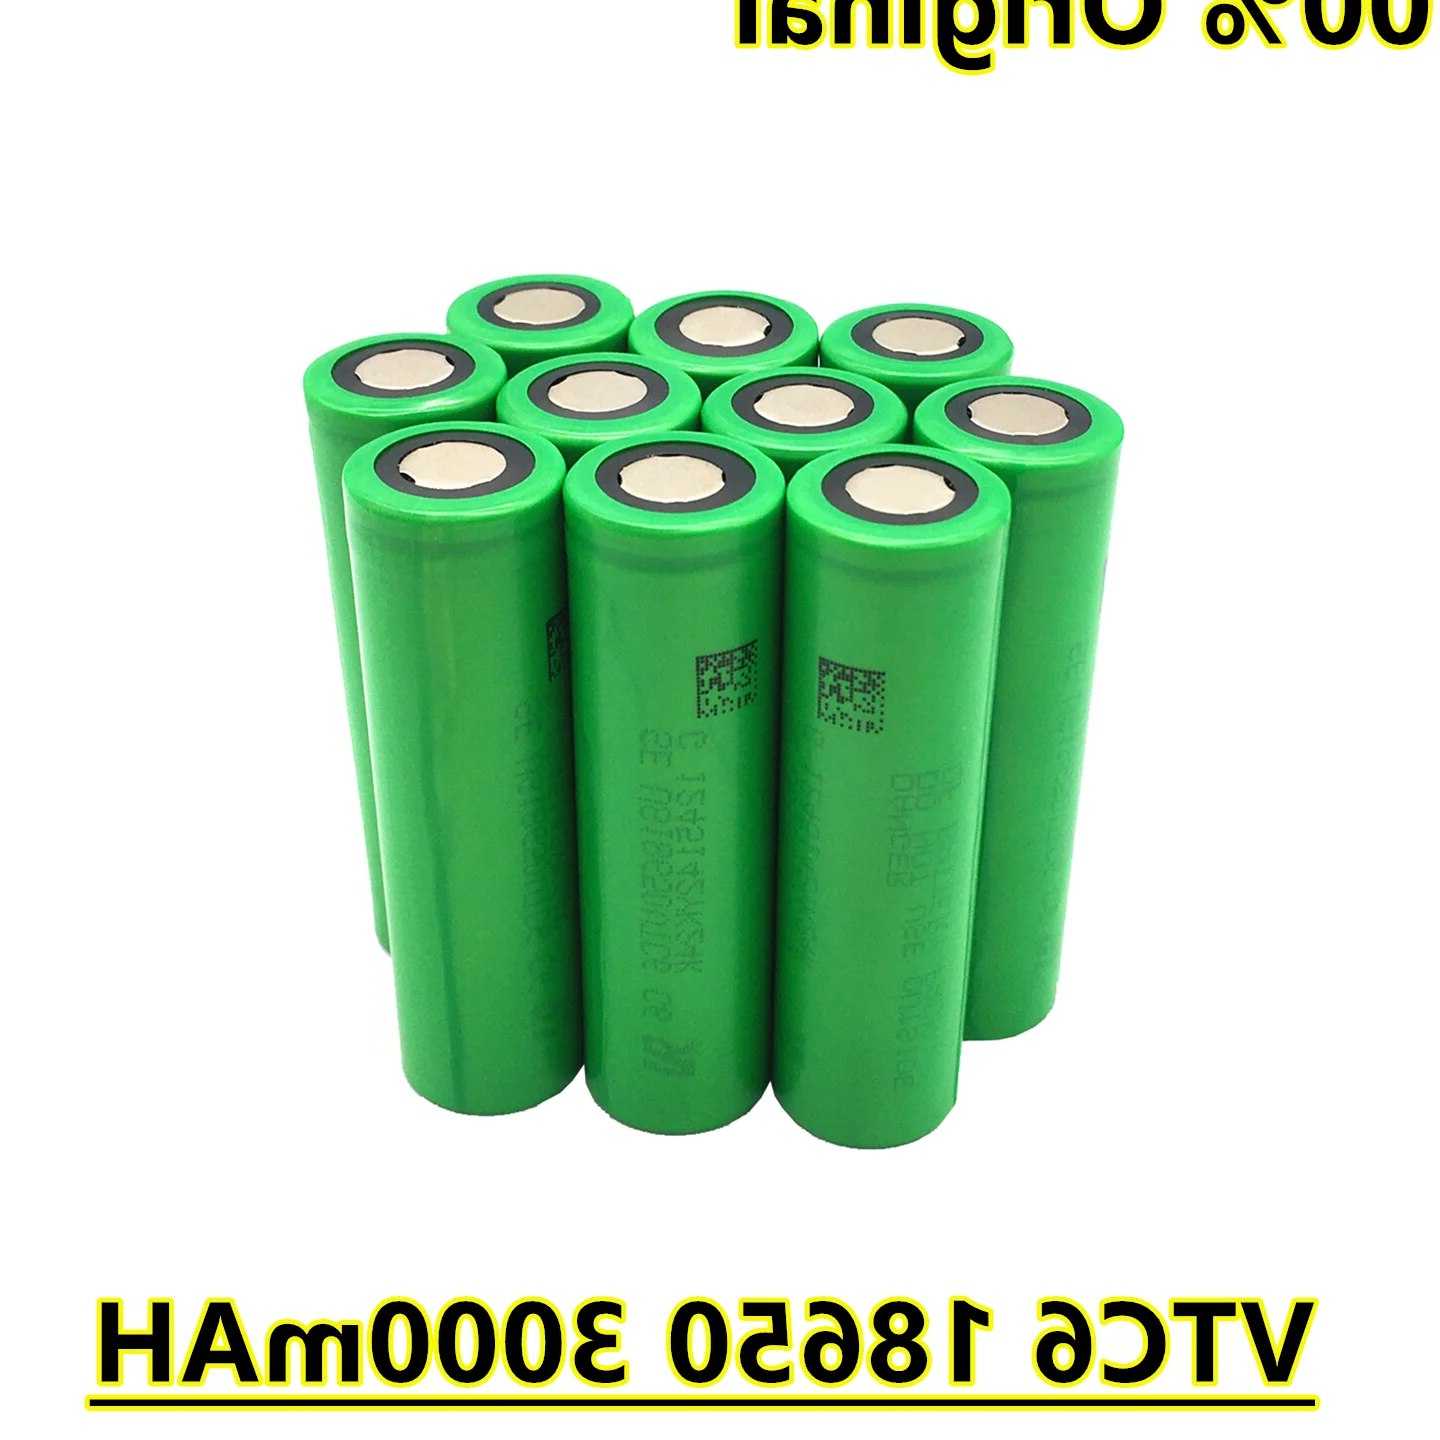 Tanio Oryginalna bateria 18650 VTC6 3.7V 3000mAh 18650 akumulator …